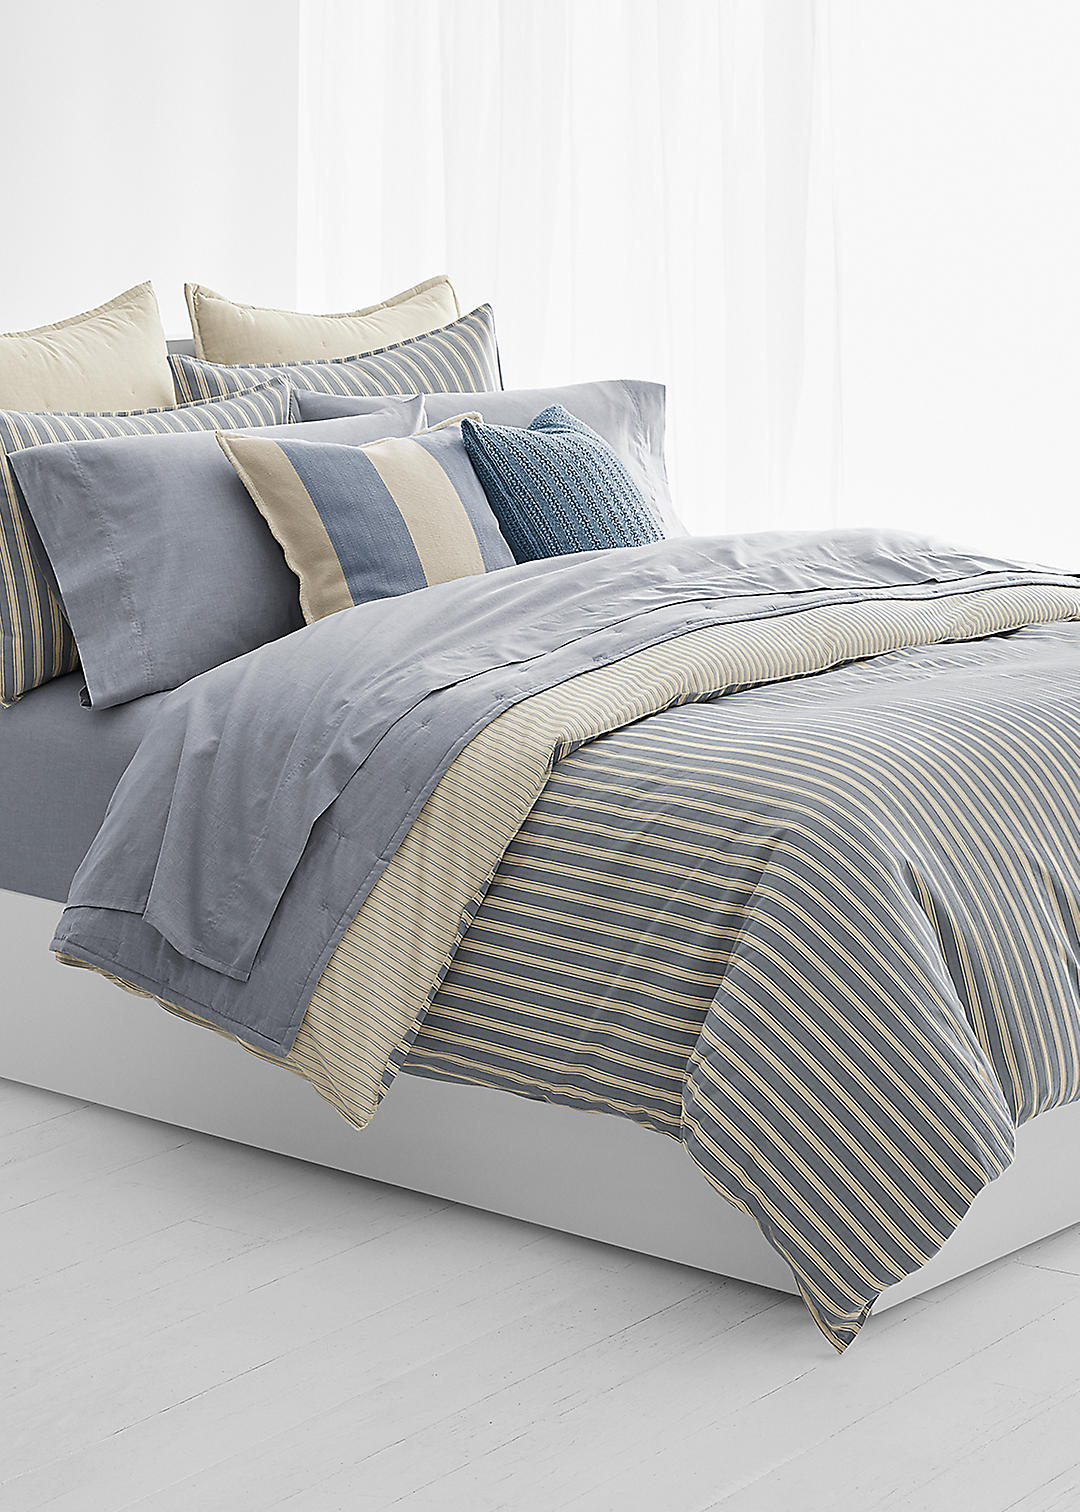 Pixel Squares Bedding Set Duvet Cover & Pillowcases Modern Check Blue Grey 